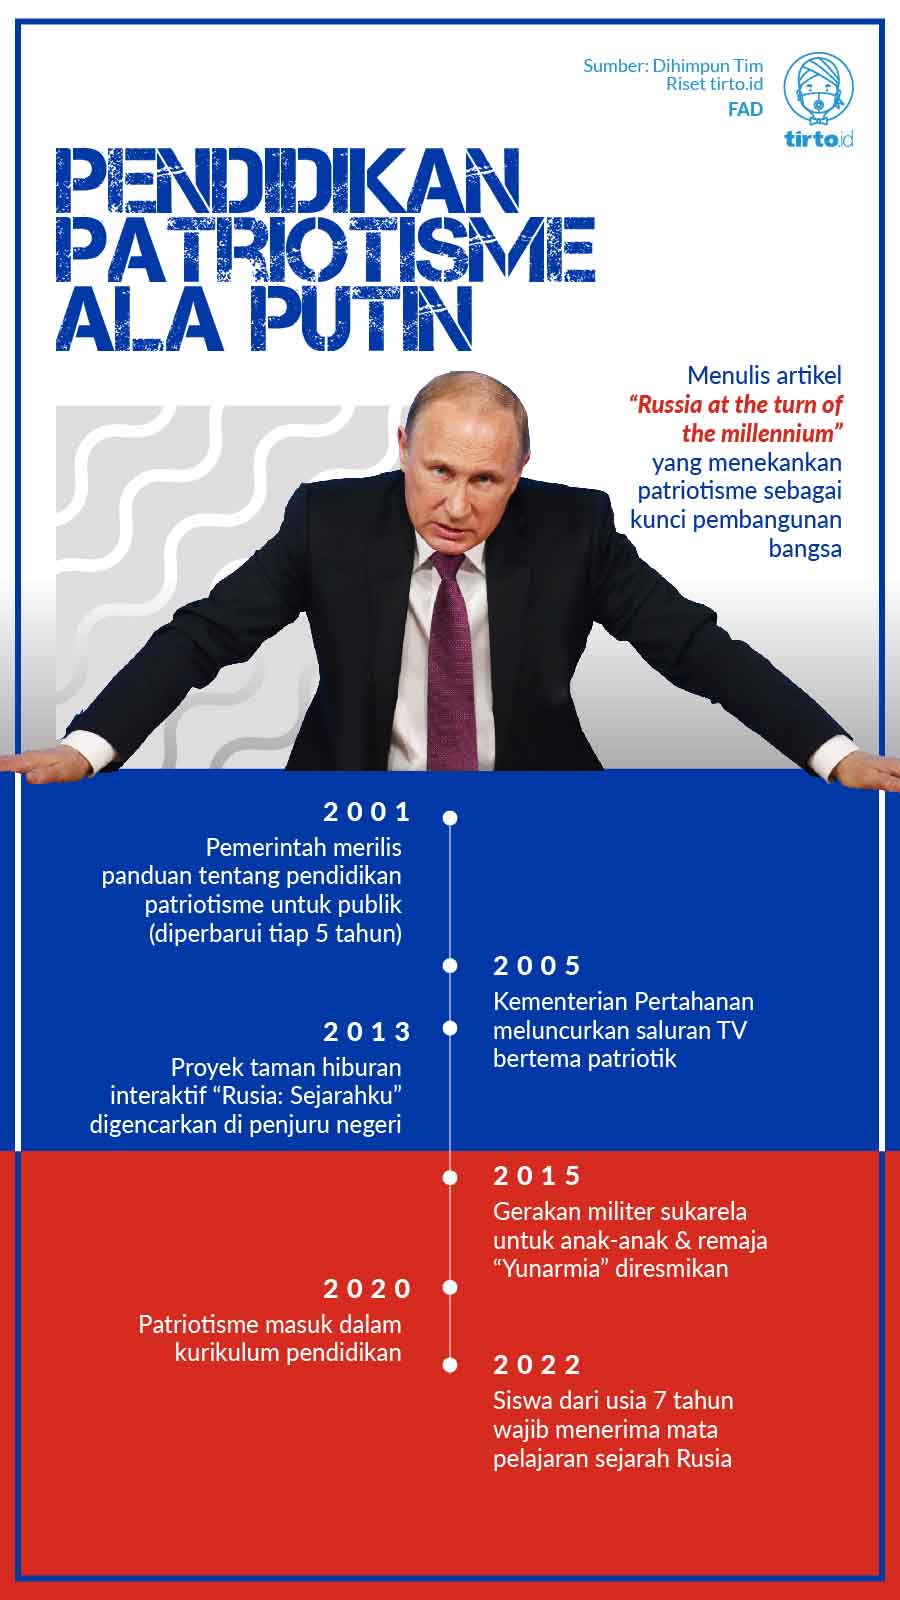 Infografik Pendidikan Patriotisme Putin